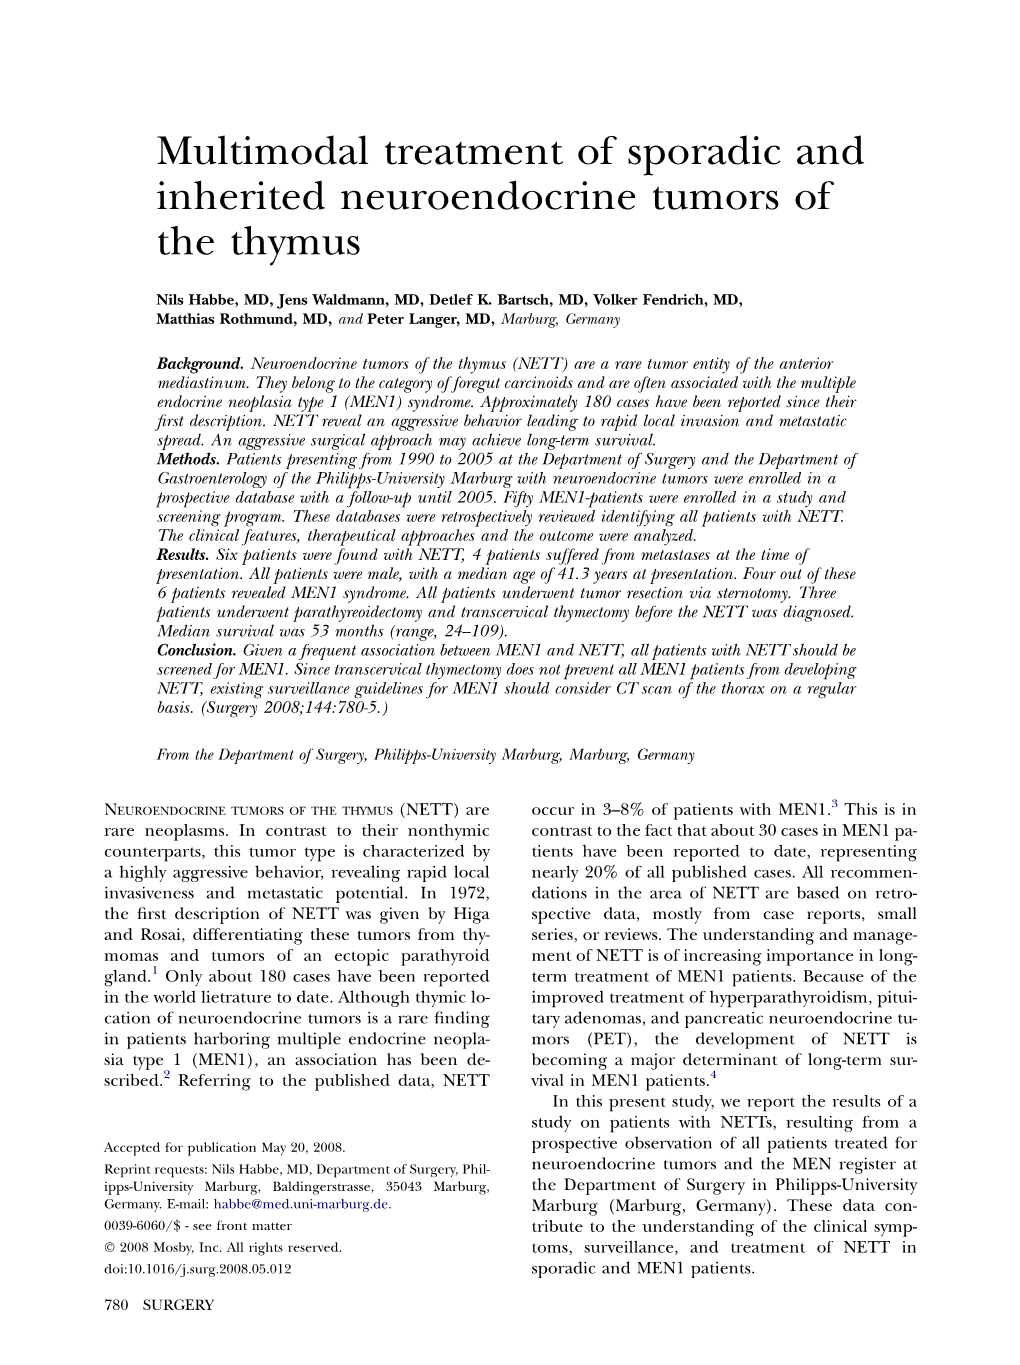 Multimodal Treatment of Sporadic and Inherited Neuroendocrine Tumors of the Thymus